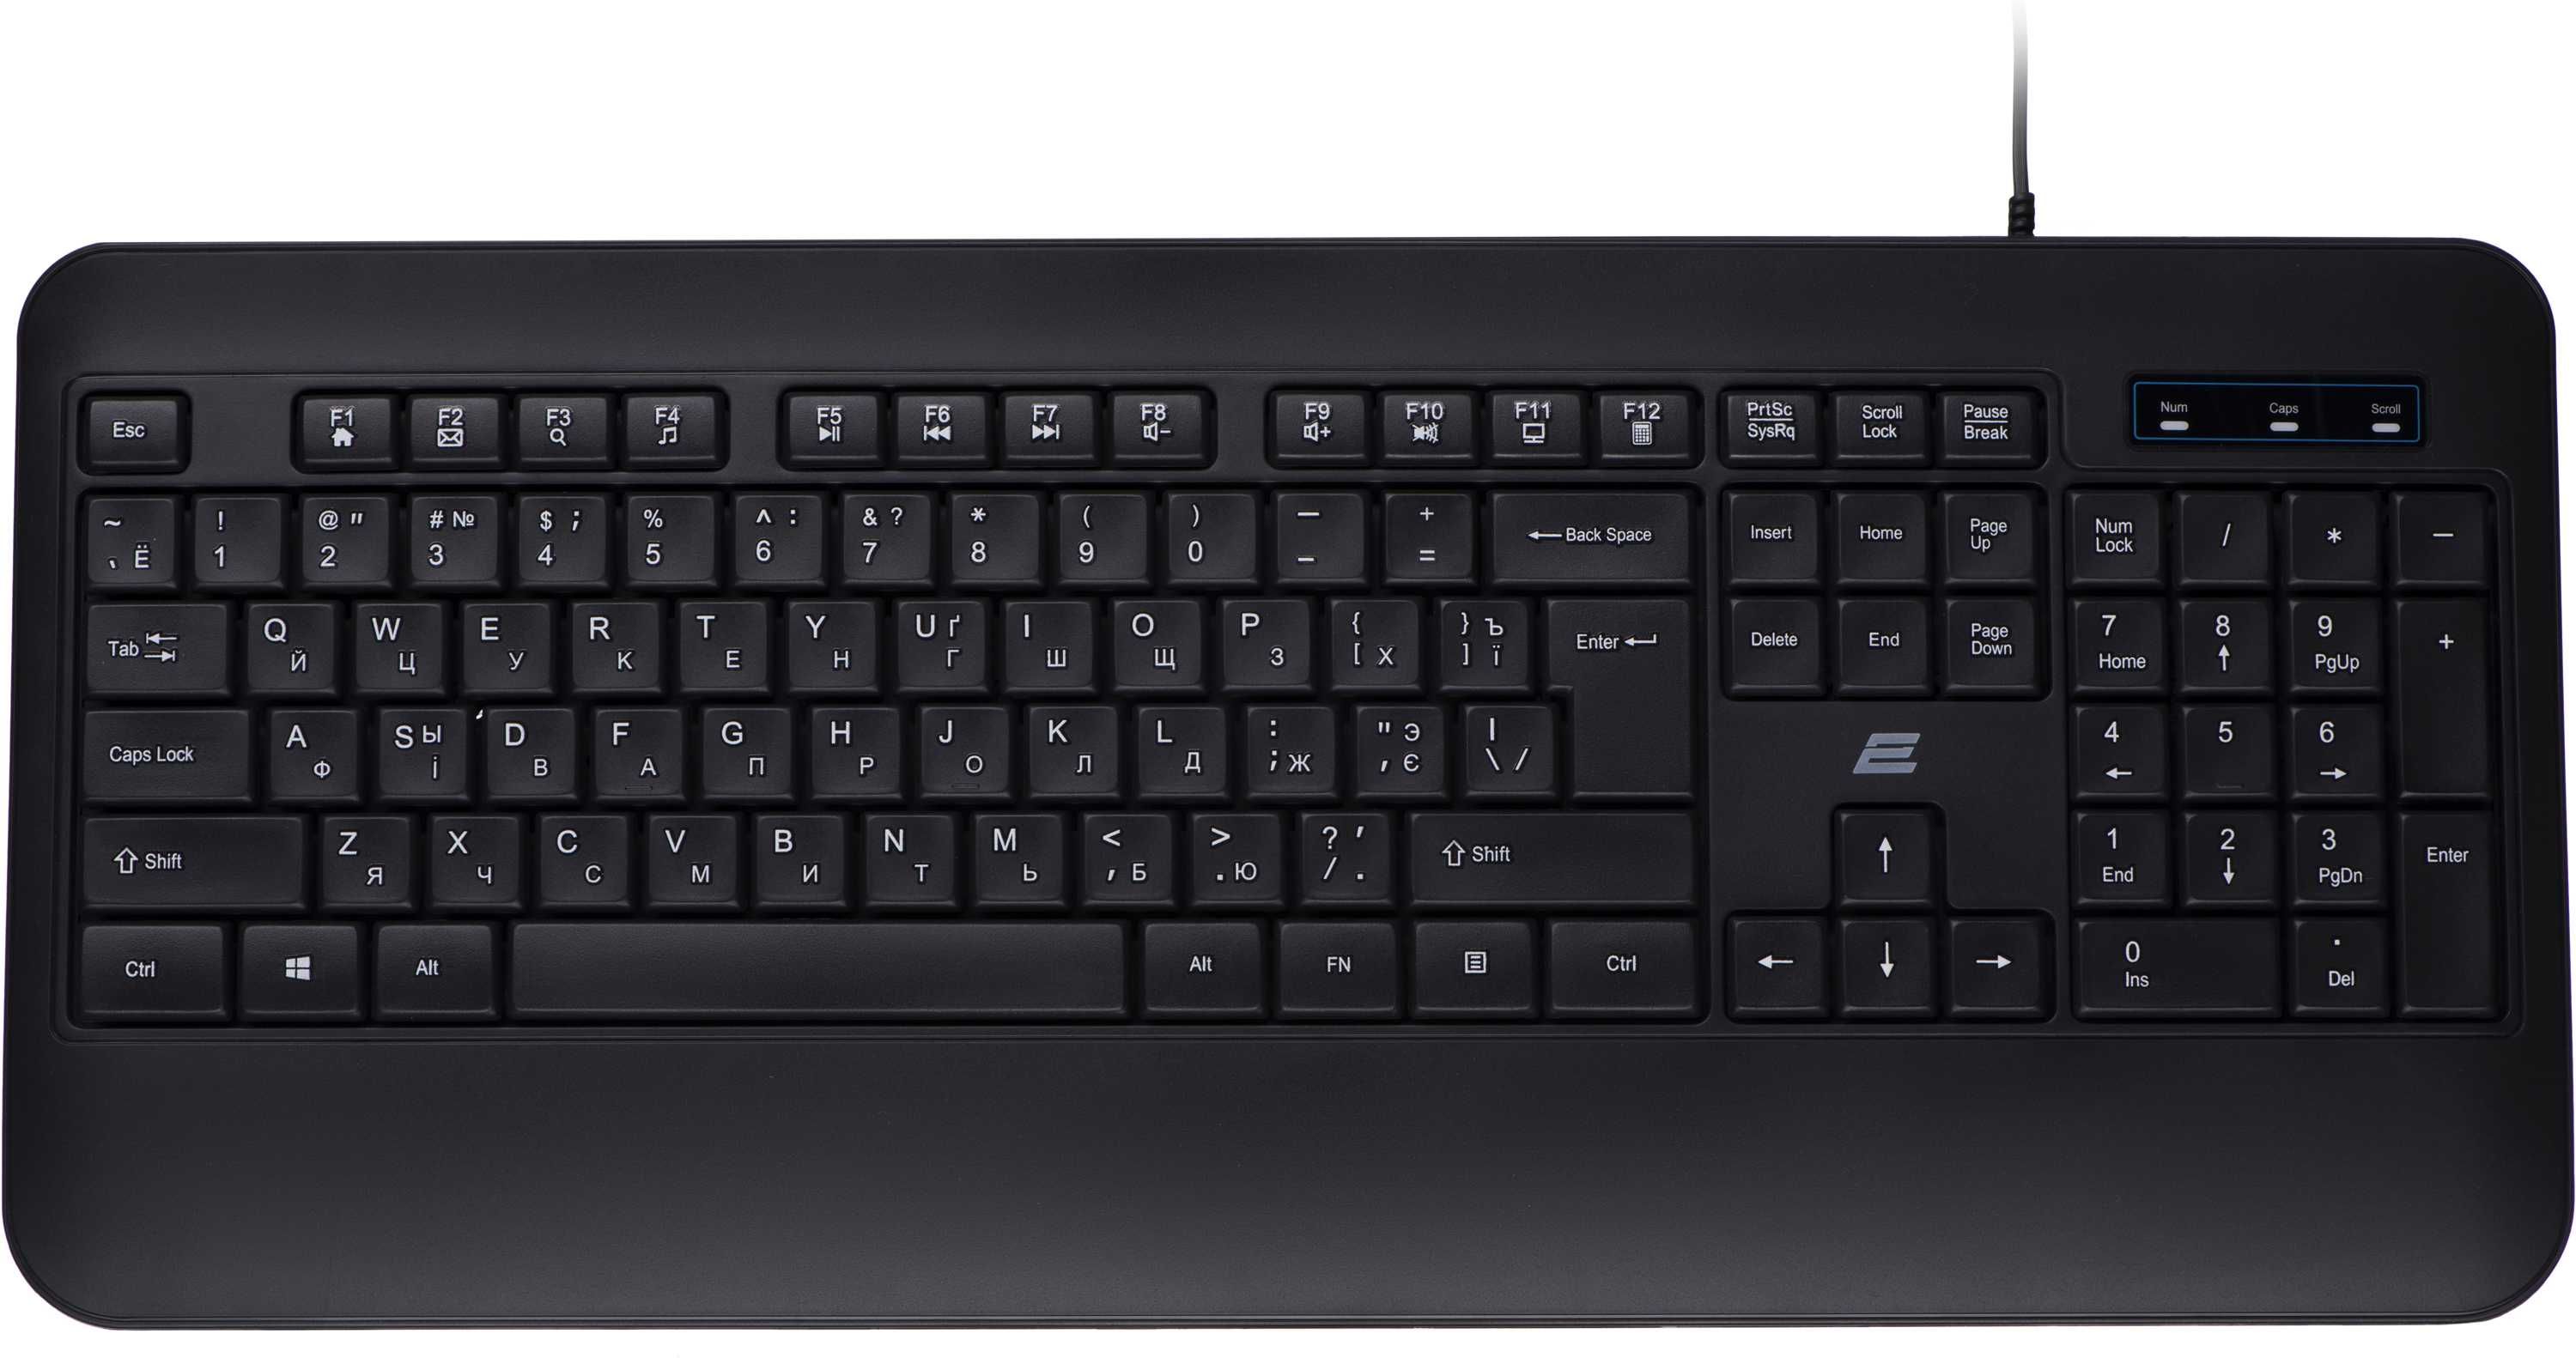 Проводная клавиатура 2е KS109 BLACK